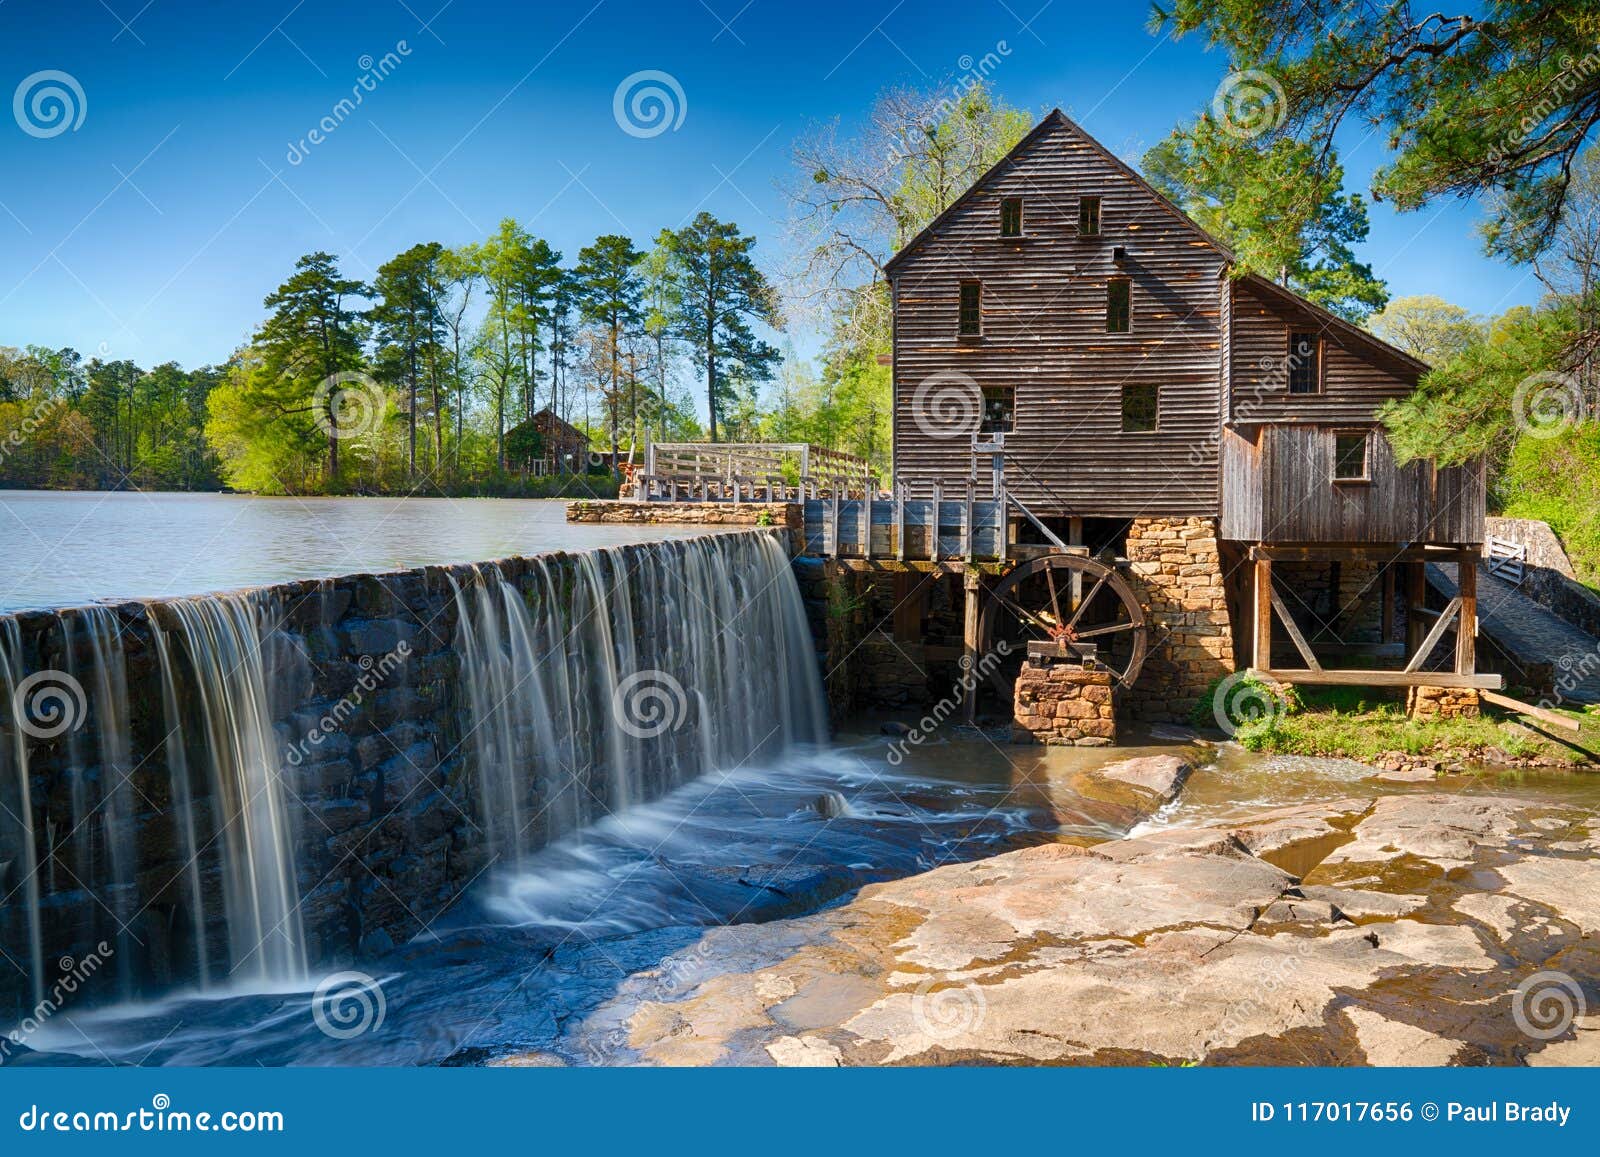 historic yates water mill